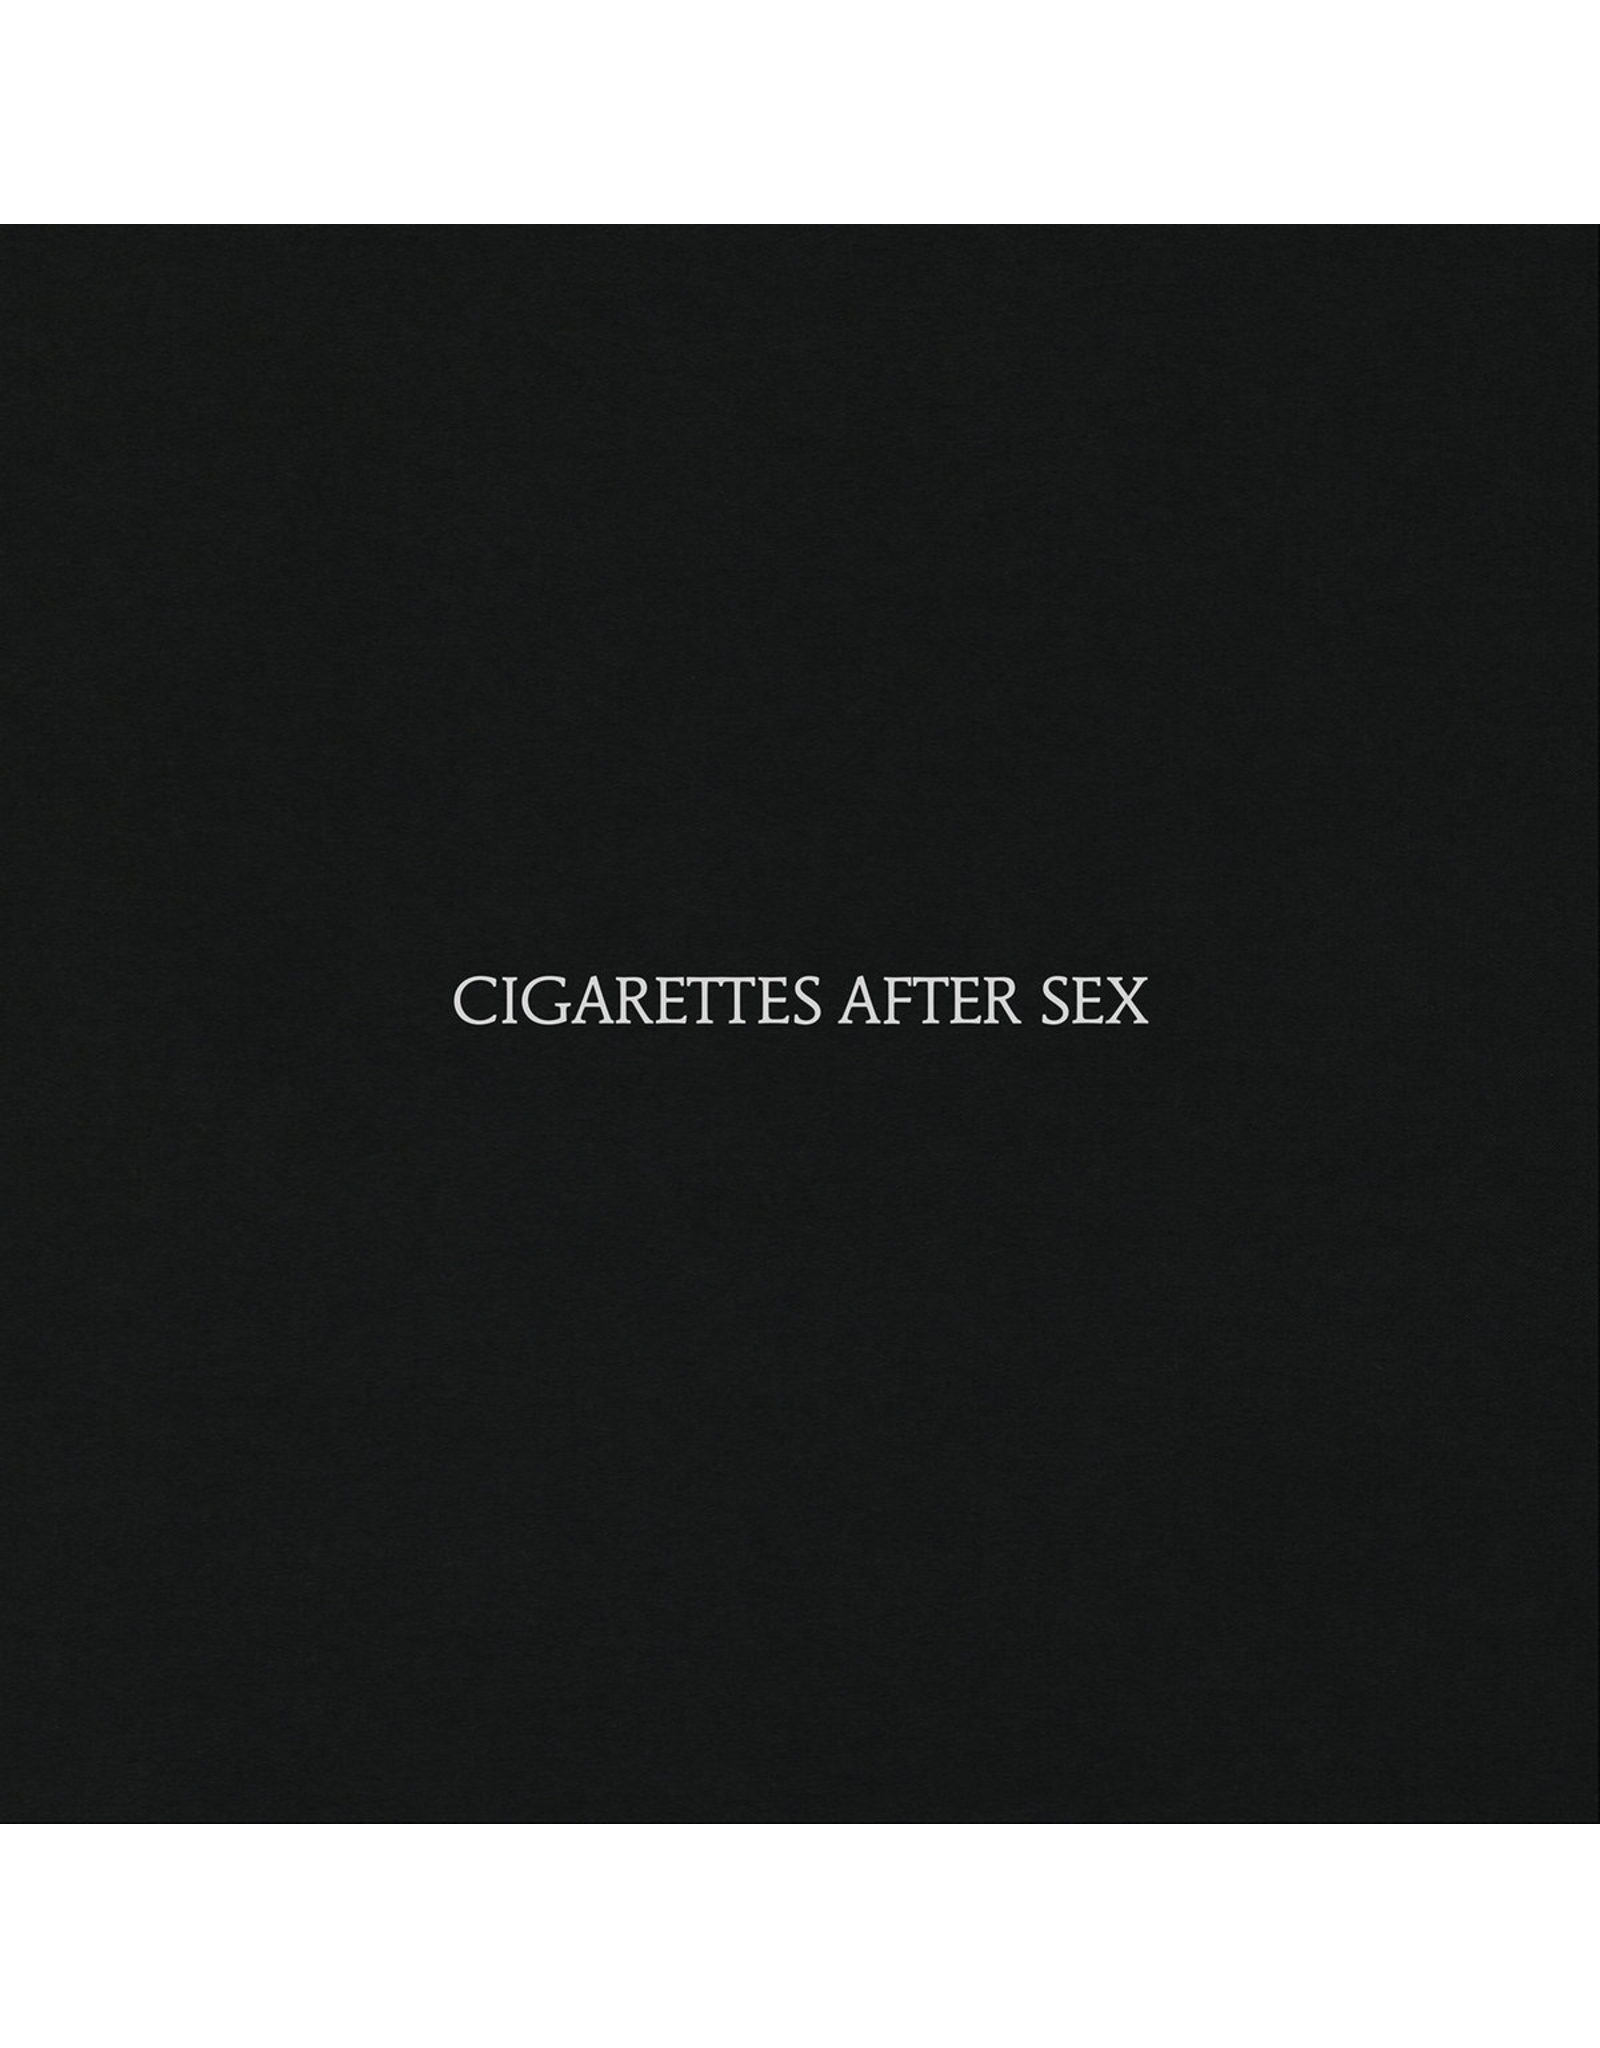 Cigarettes After Sex Cigarettes After Sex Exclusive White Vinyl